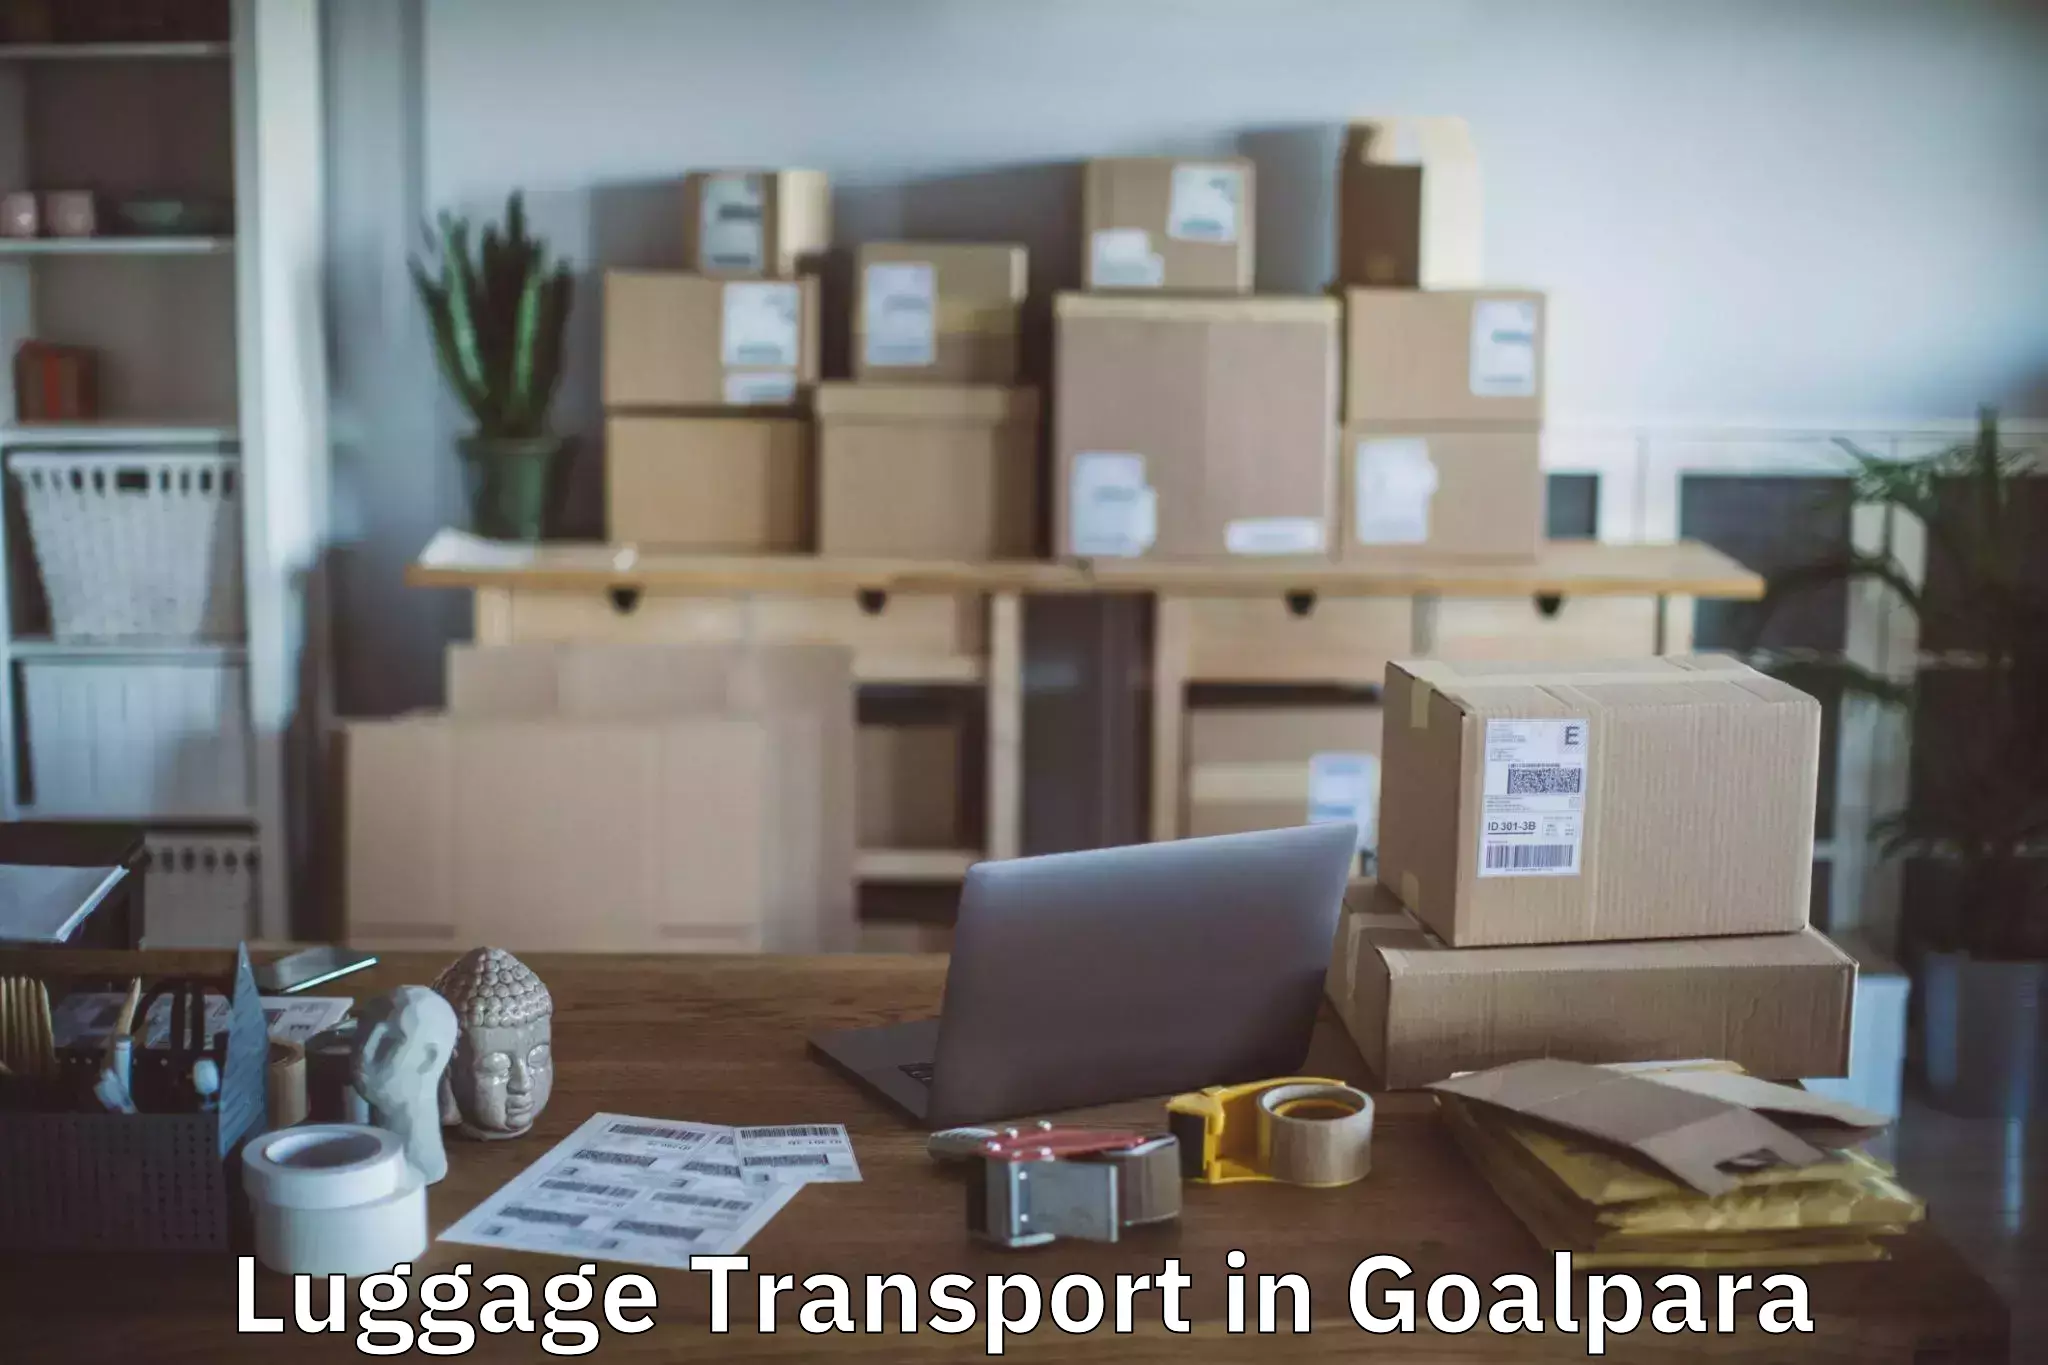 Luggage transport service in Goalpara